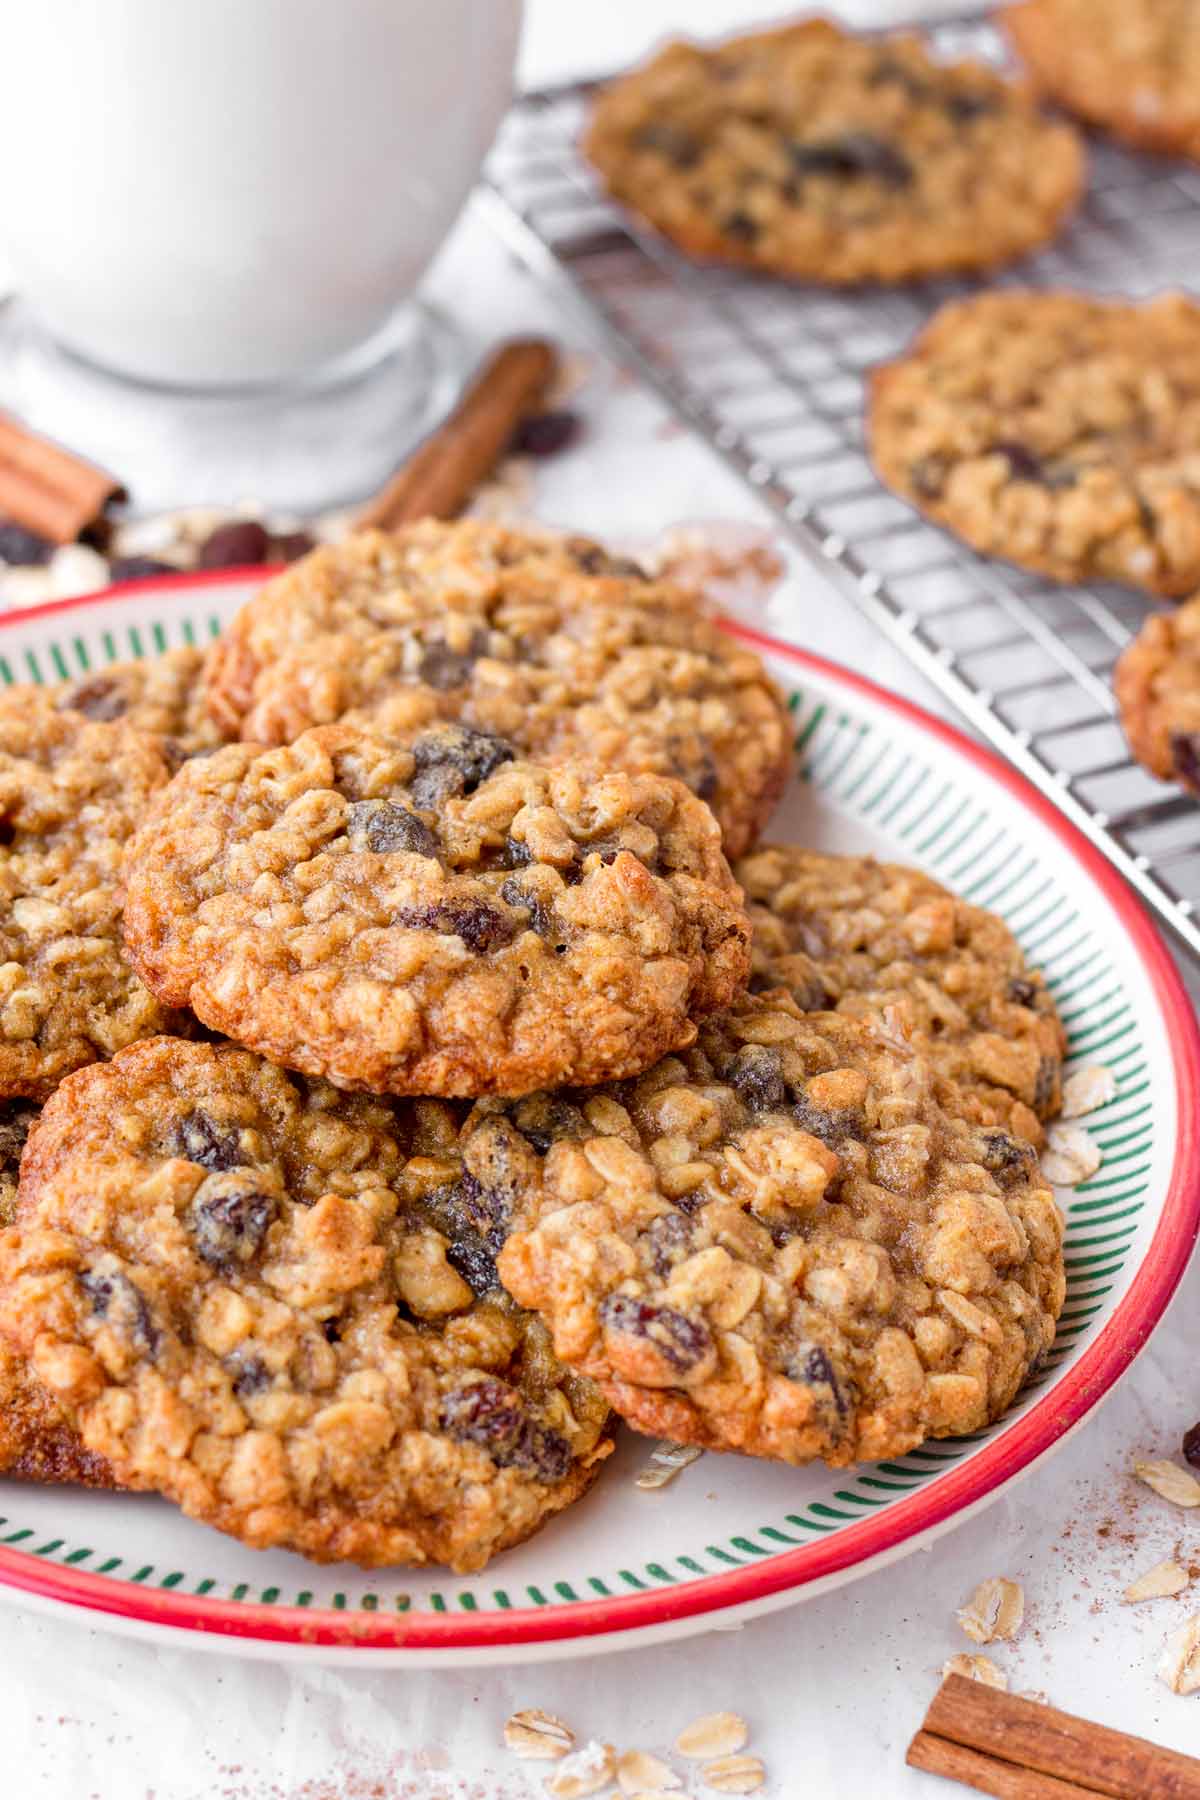 oatmeal raisin cookies with cinnamon and raisins